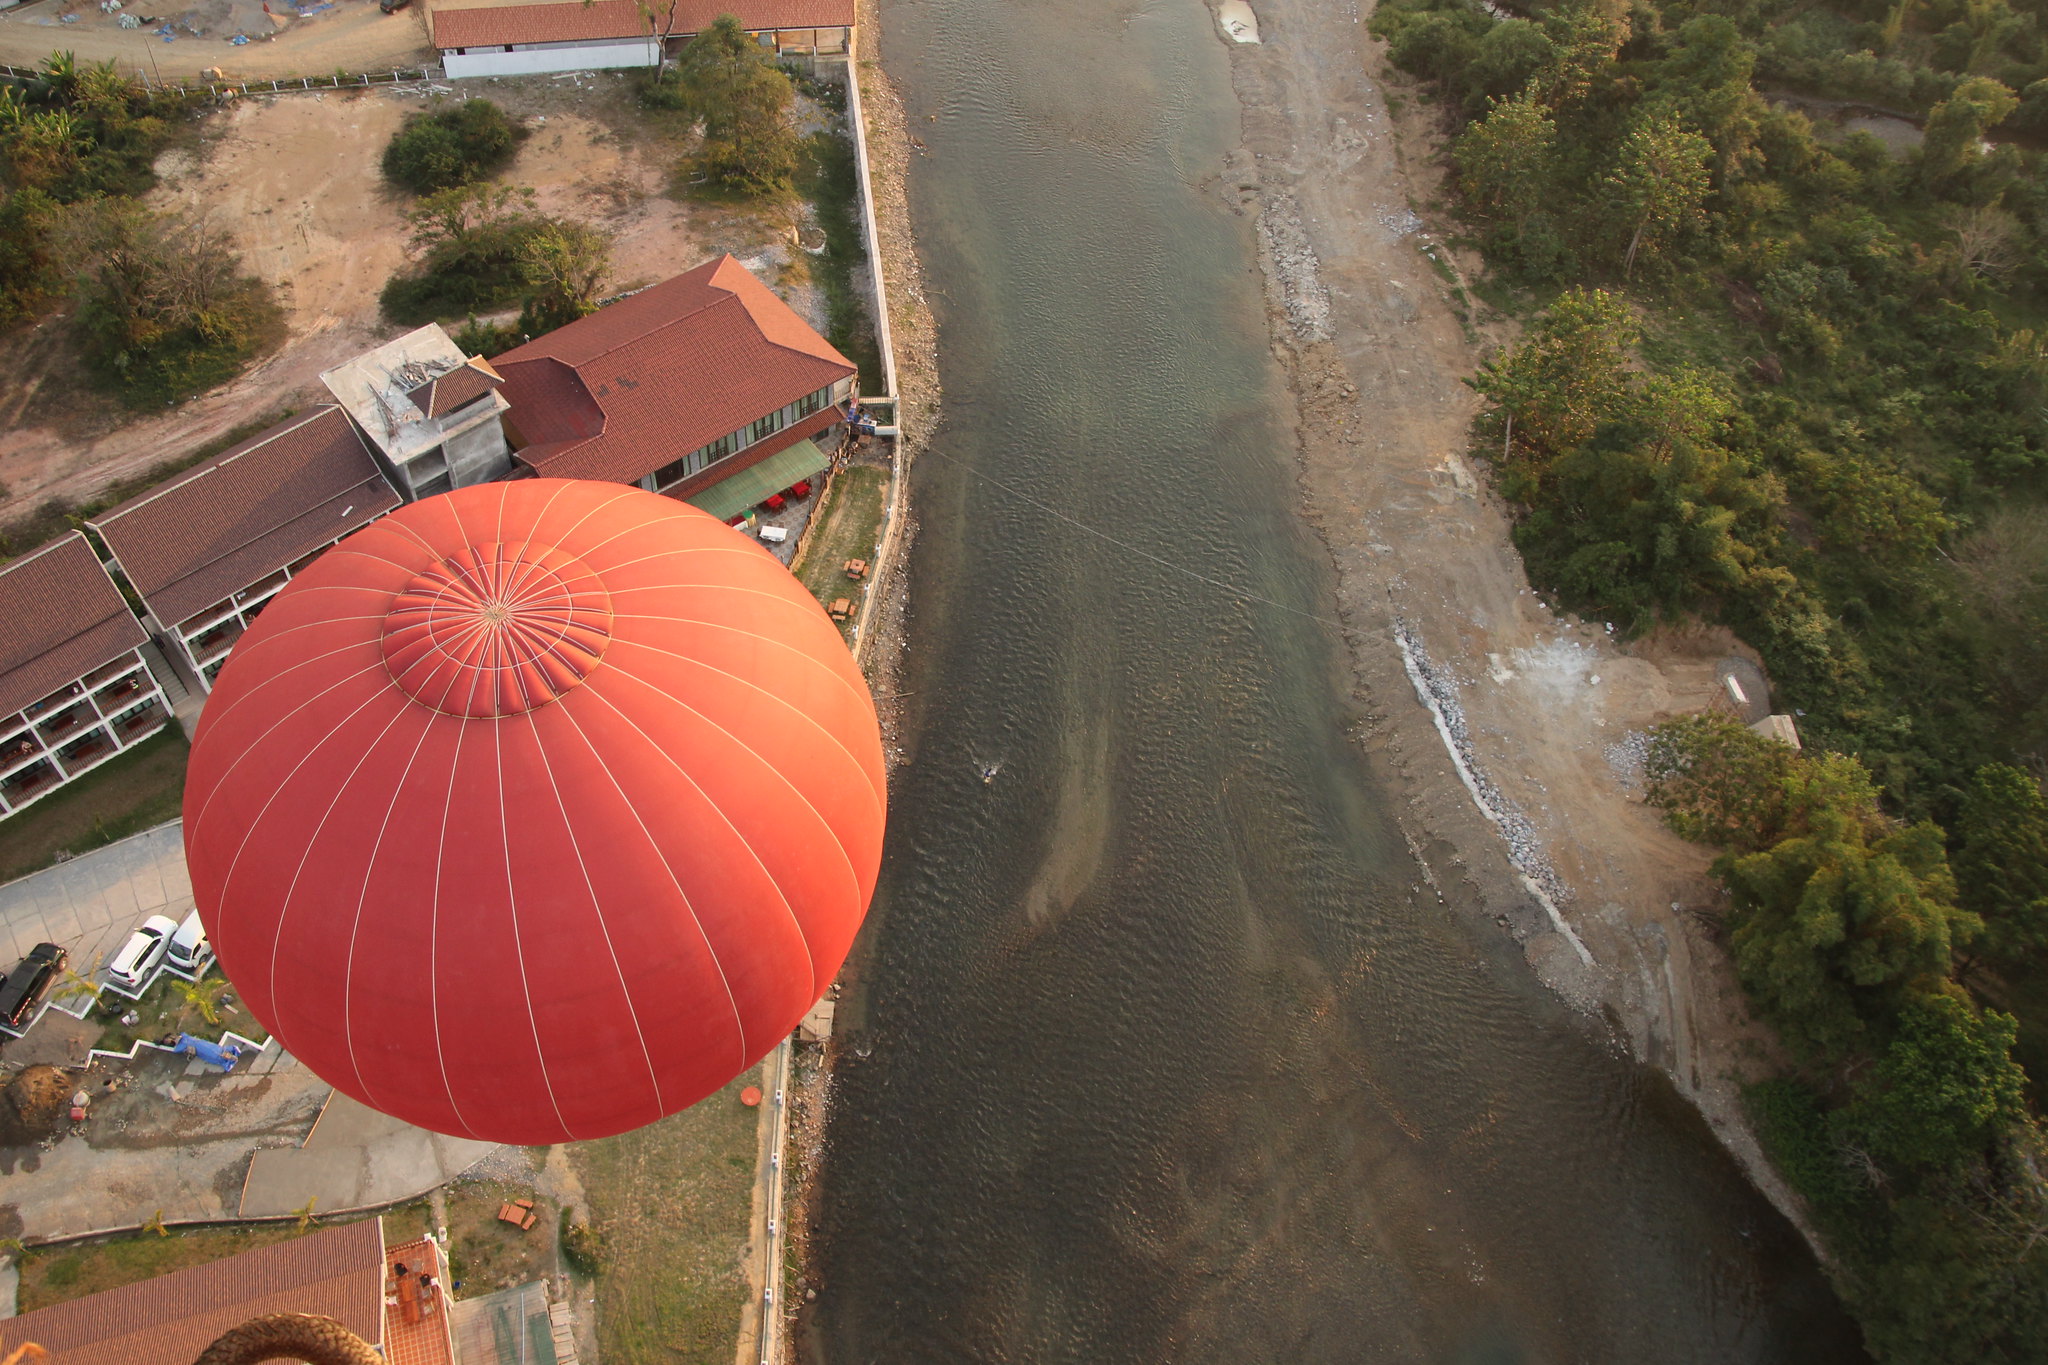 Balloons over Vang Vieng